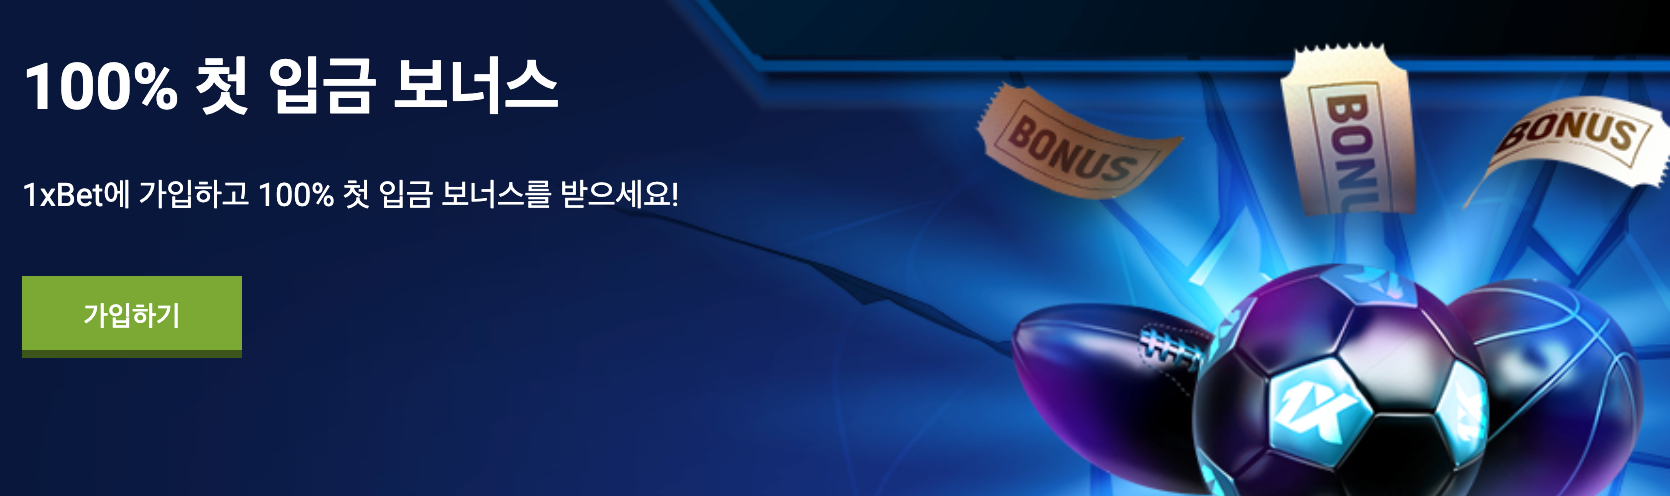 online casinos in south korea 1xbet